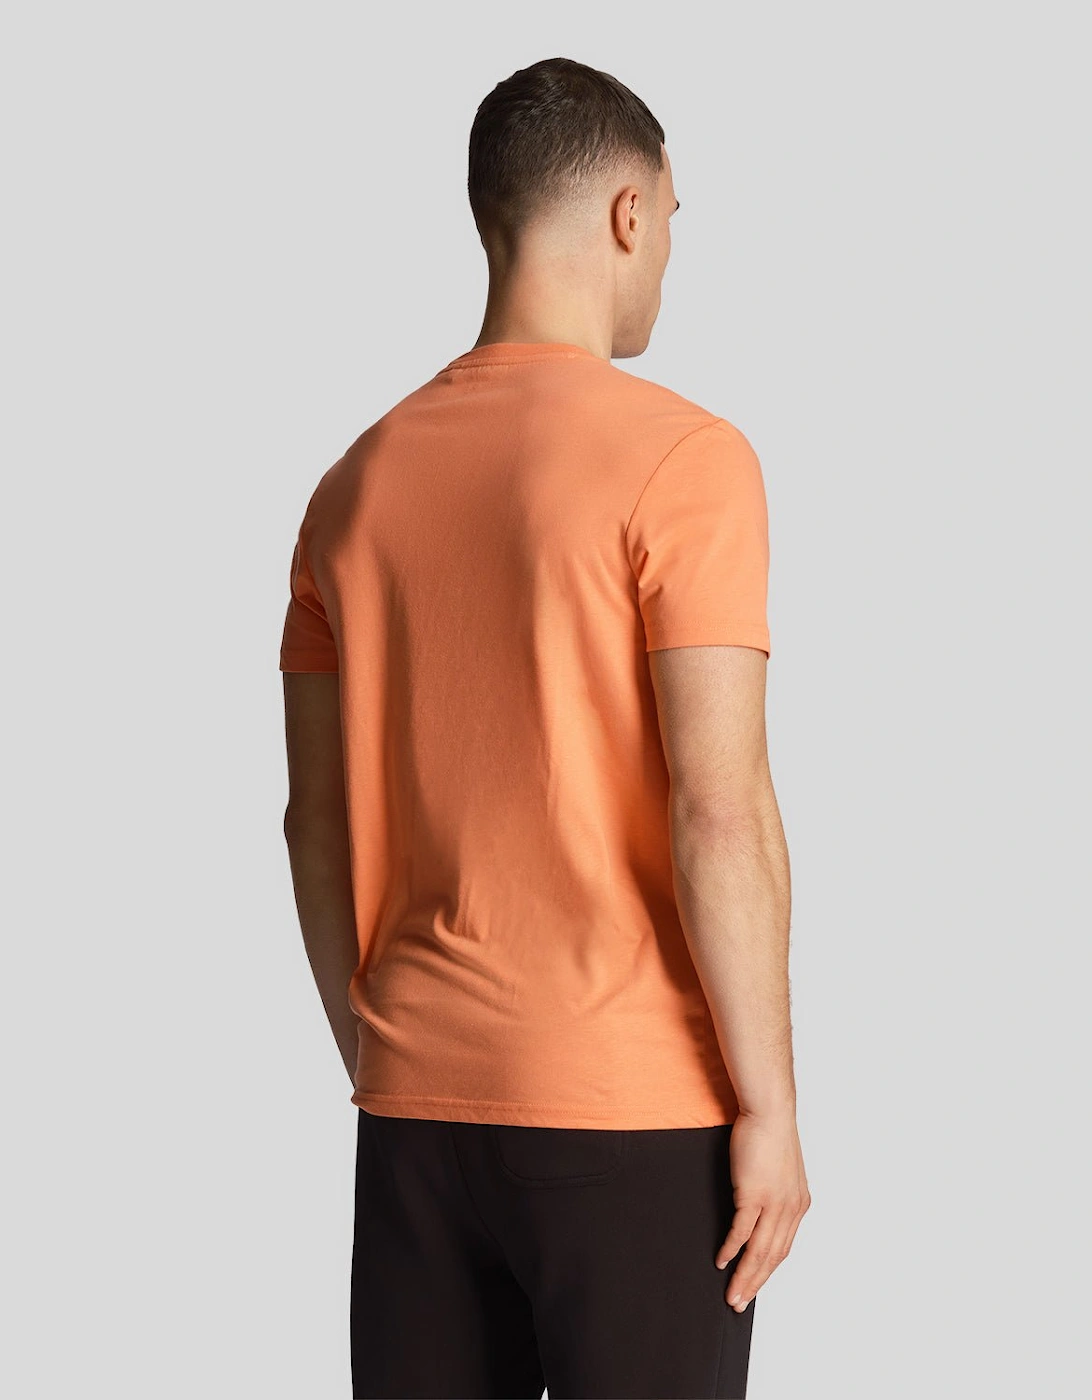 Sports Short Sleeve Martin T-Shirt